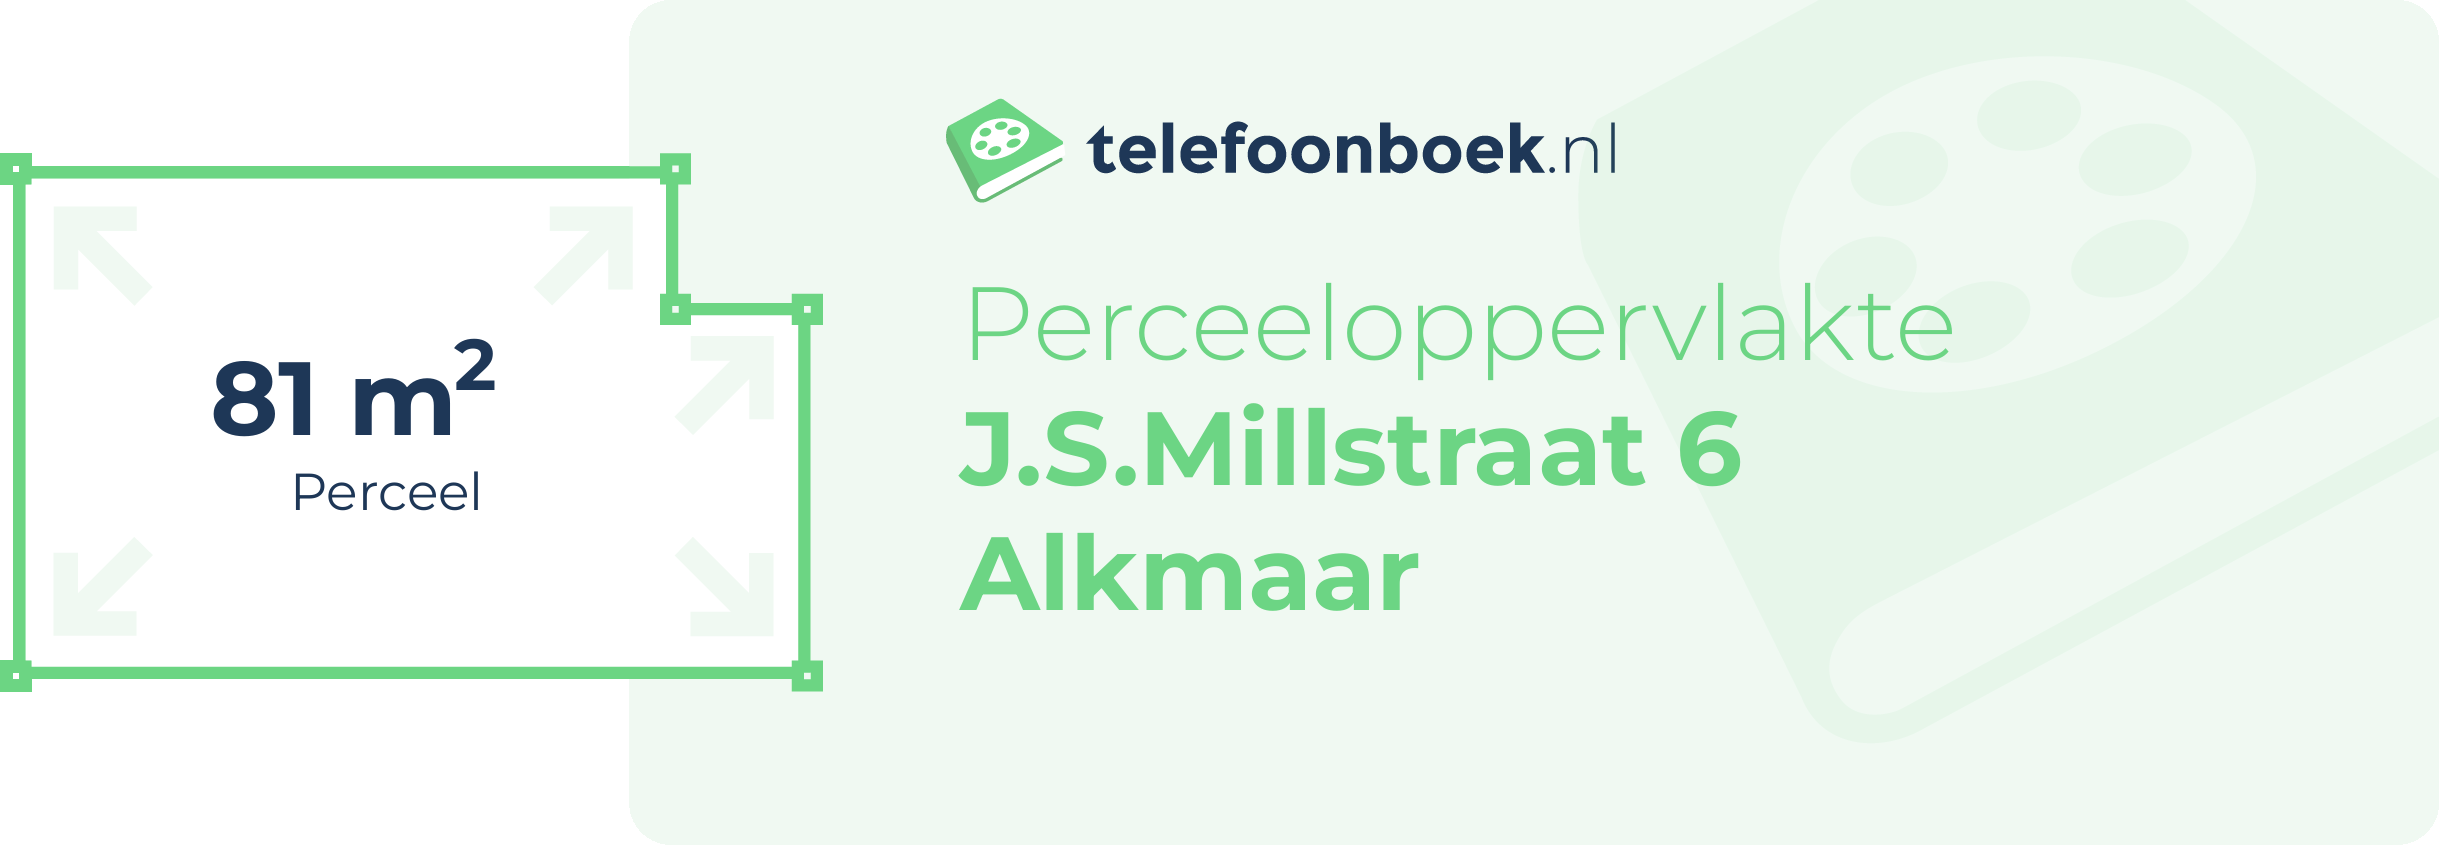 Perceeloppervlakte J.S.Millstraat 6 Alkmaar